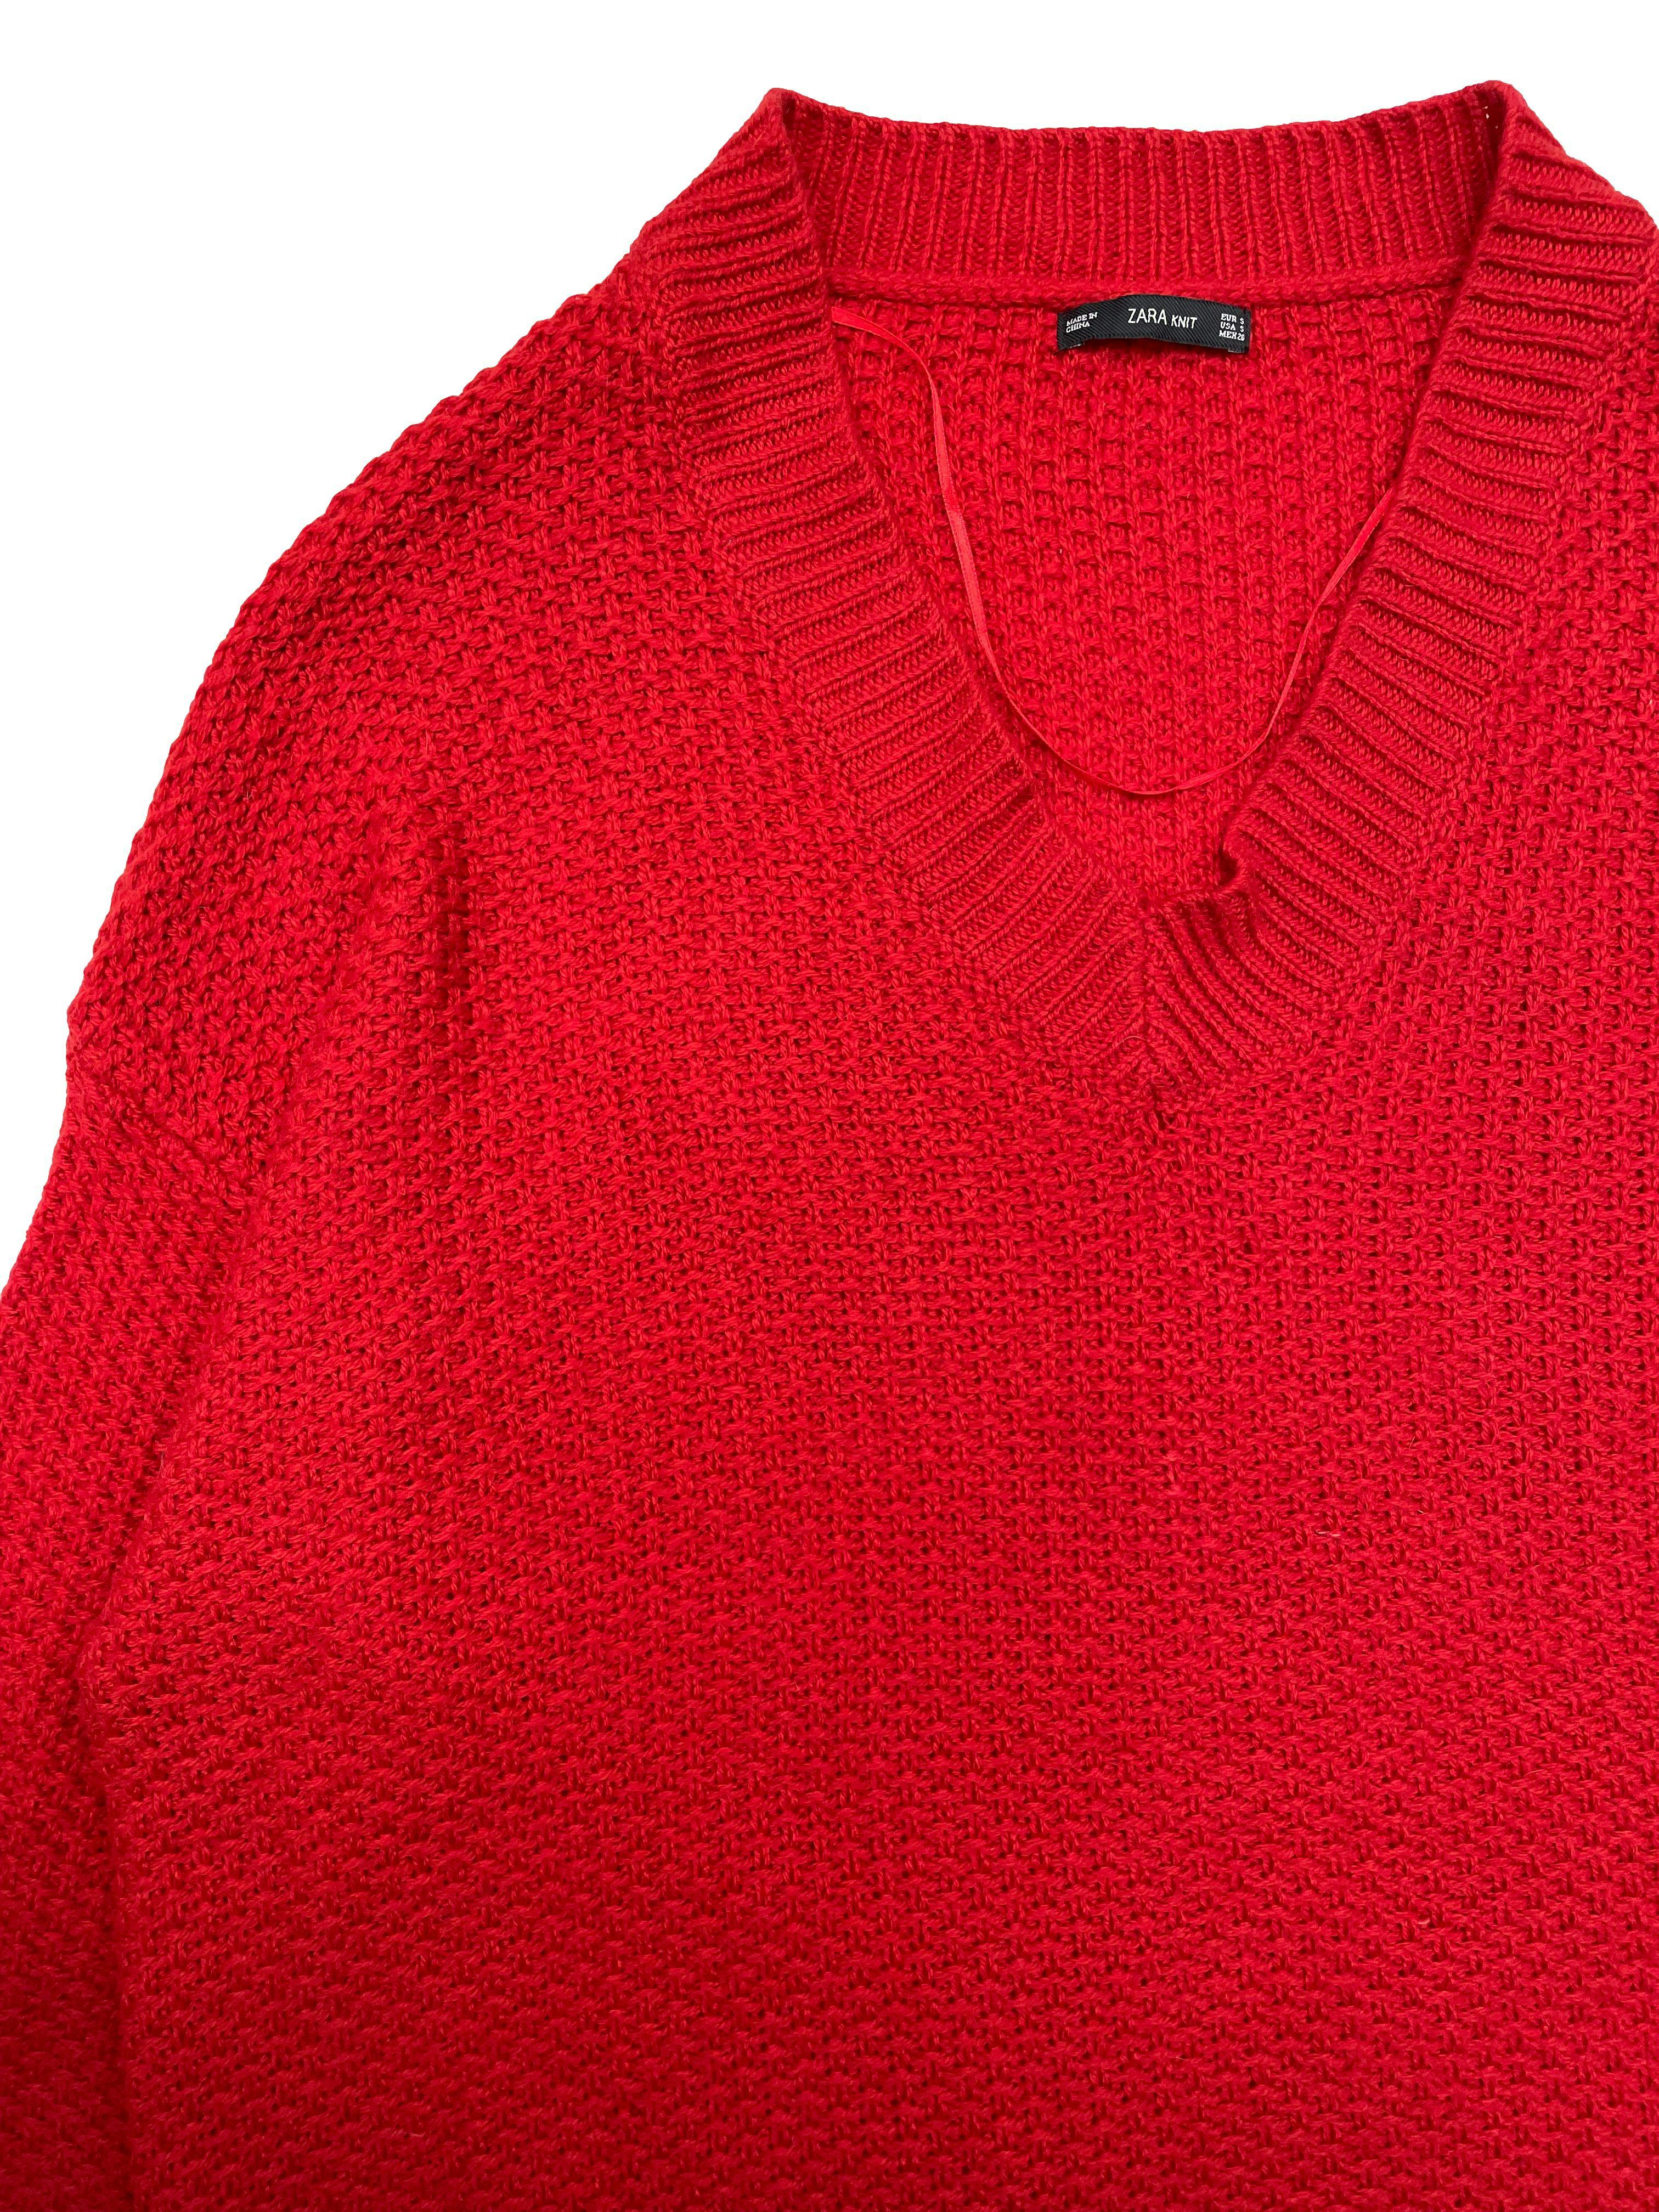 Chompa oversize Zara roja, escote en V. Busto 130cm, Largo 62cm.